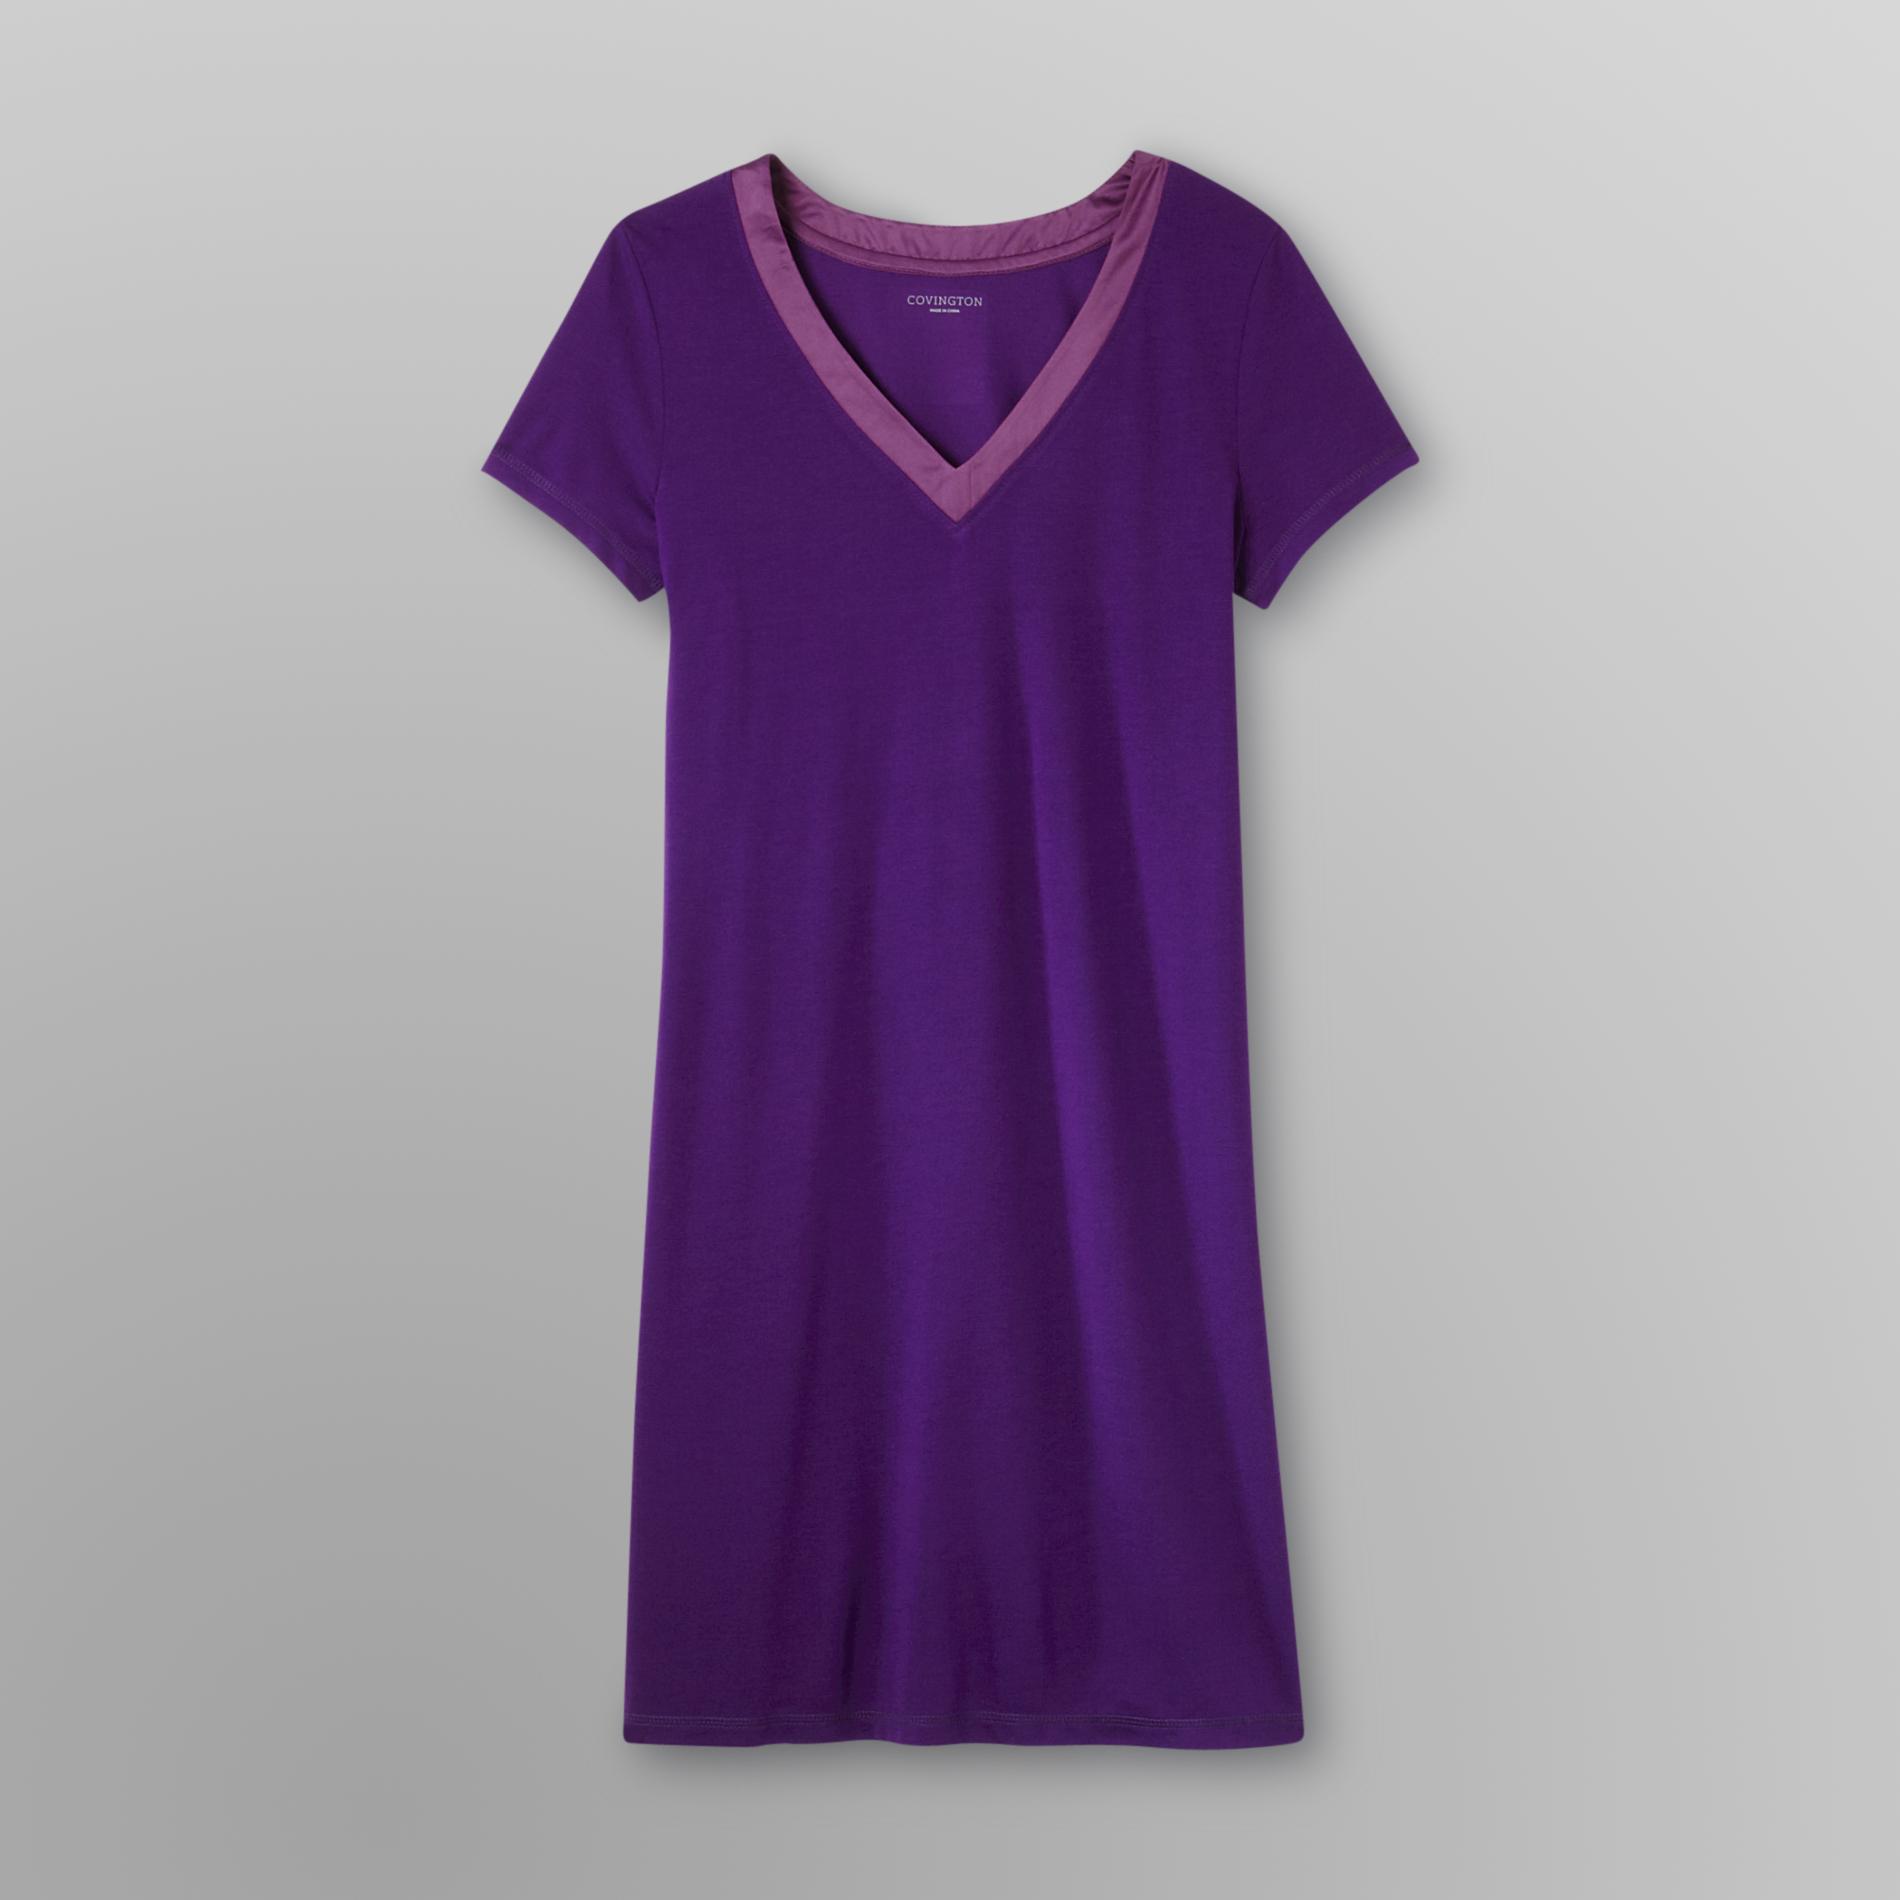 Covington Women's Sleep Shirt